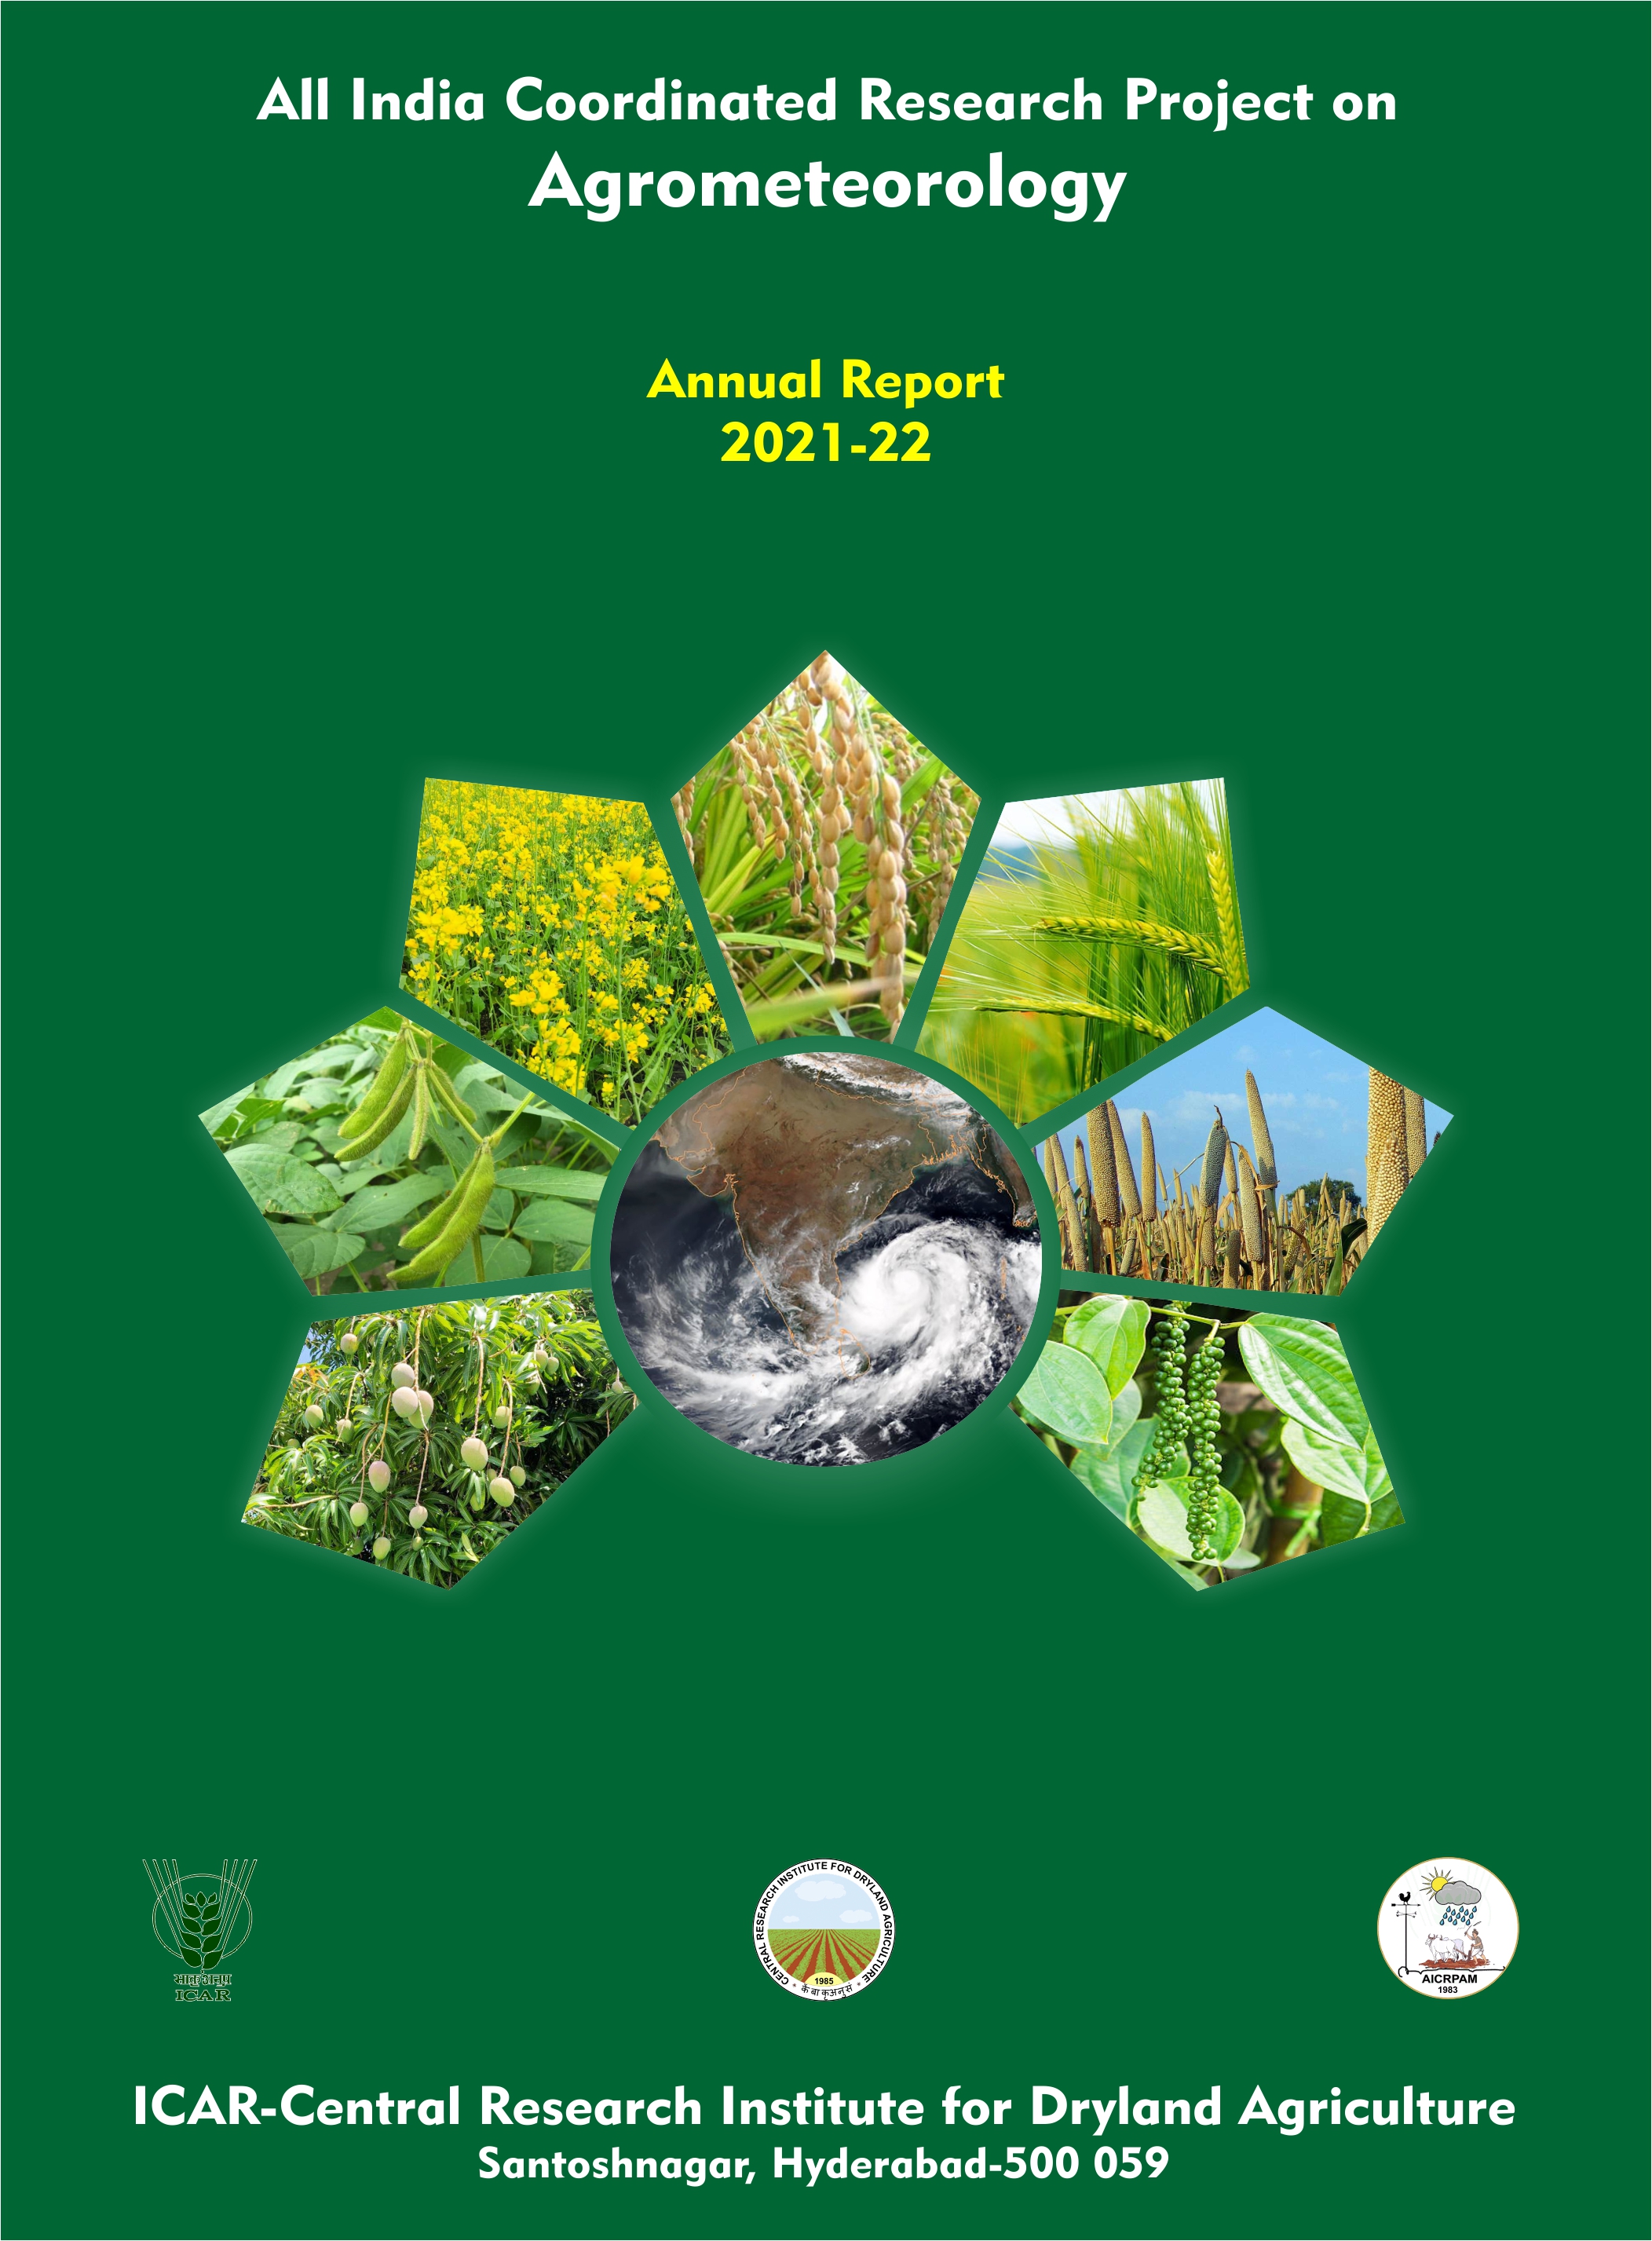 Annual Report - Hyderabad